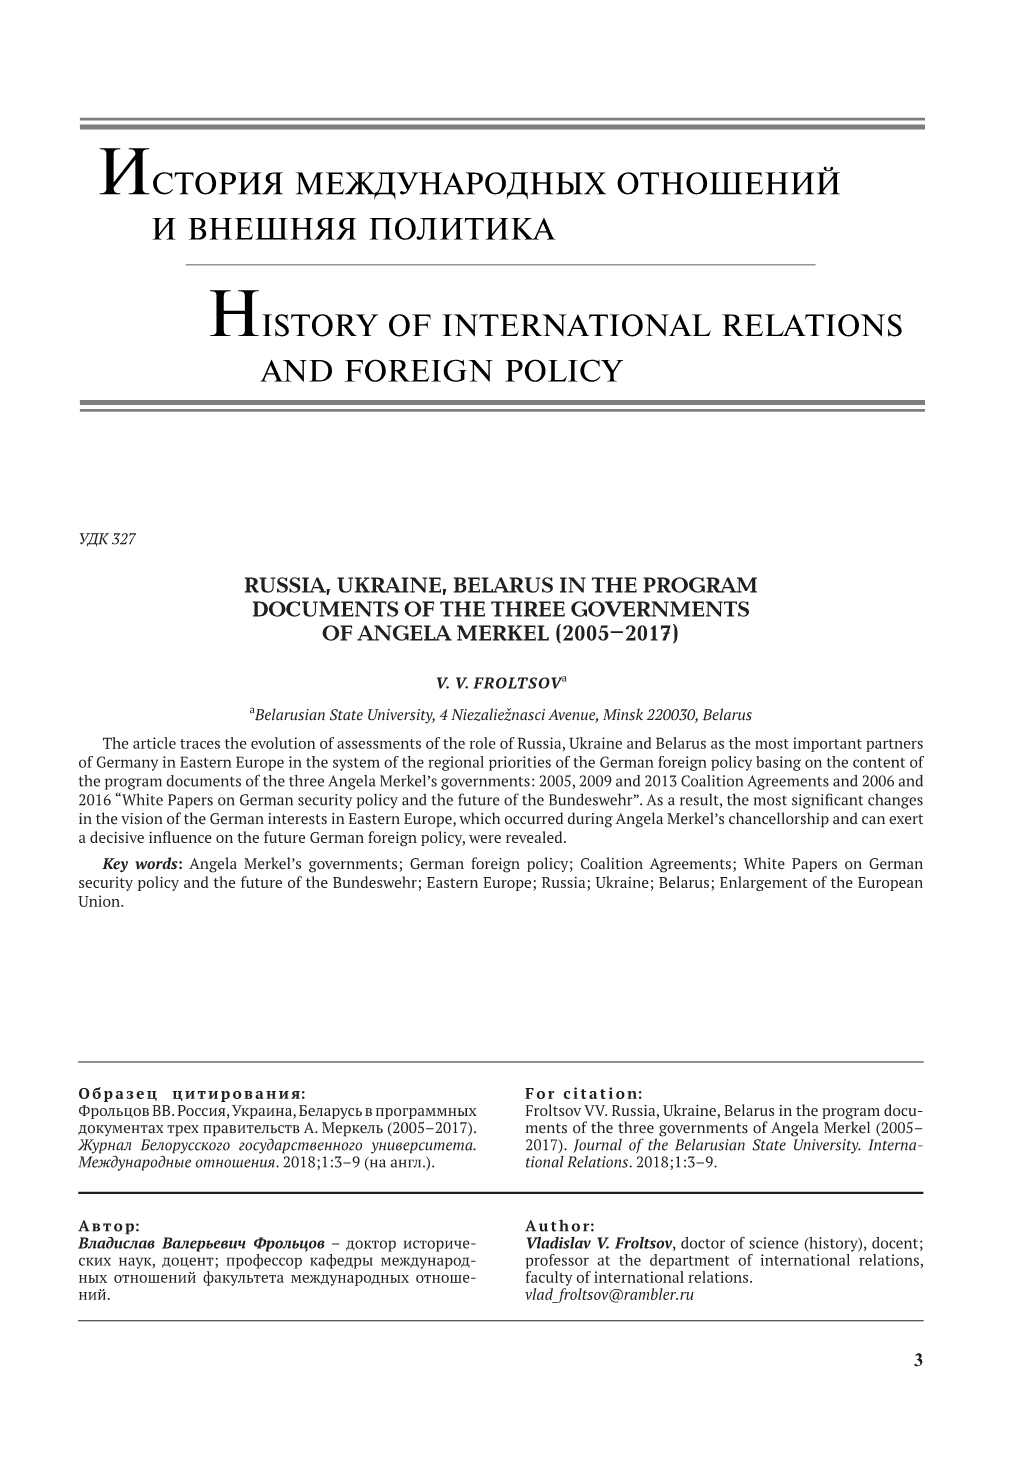 Russia, Ukraine, Belarus in the Program Documents of the Three Governments of Angela Merkel (2005–2017)